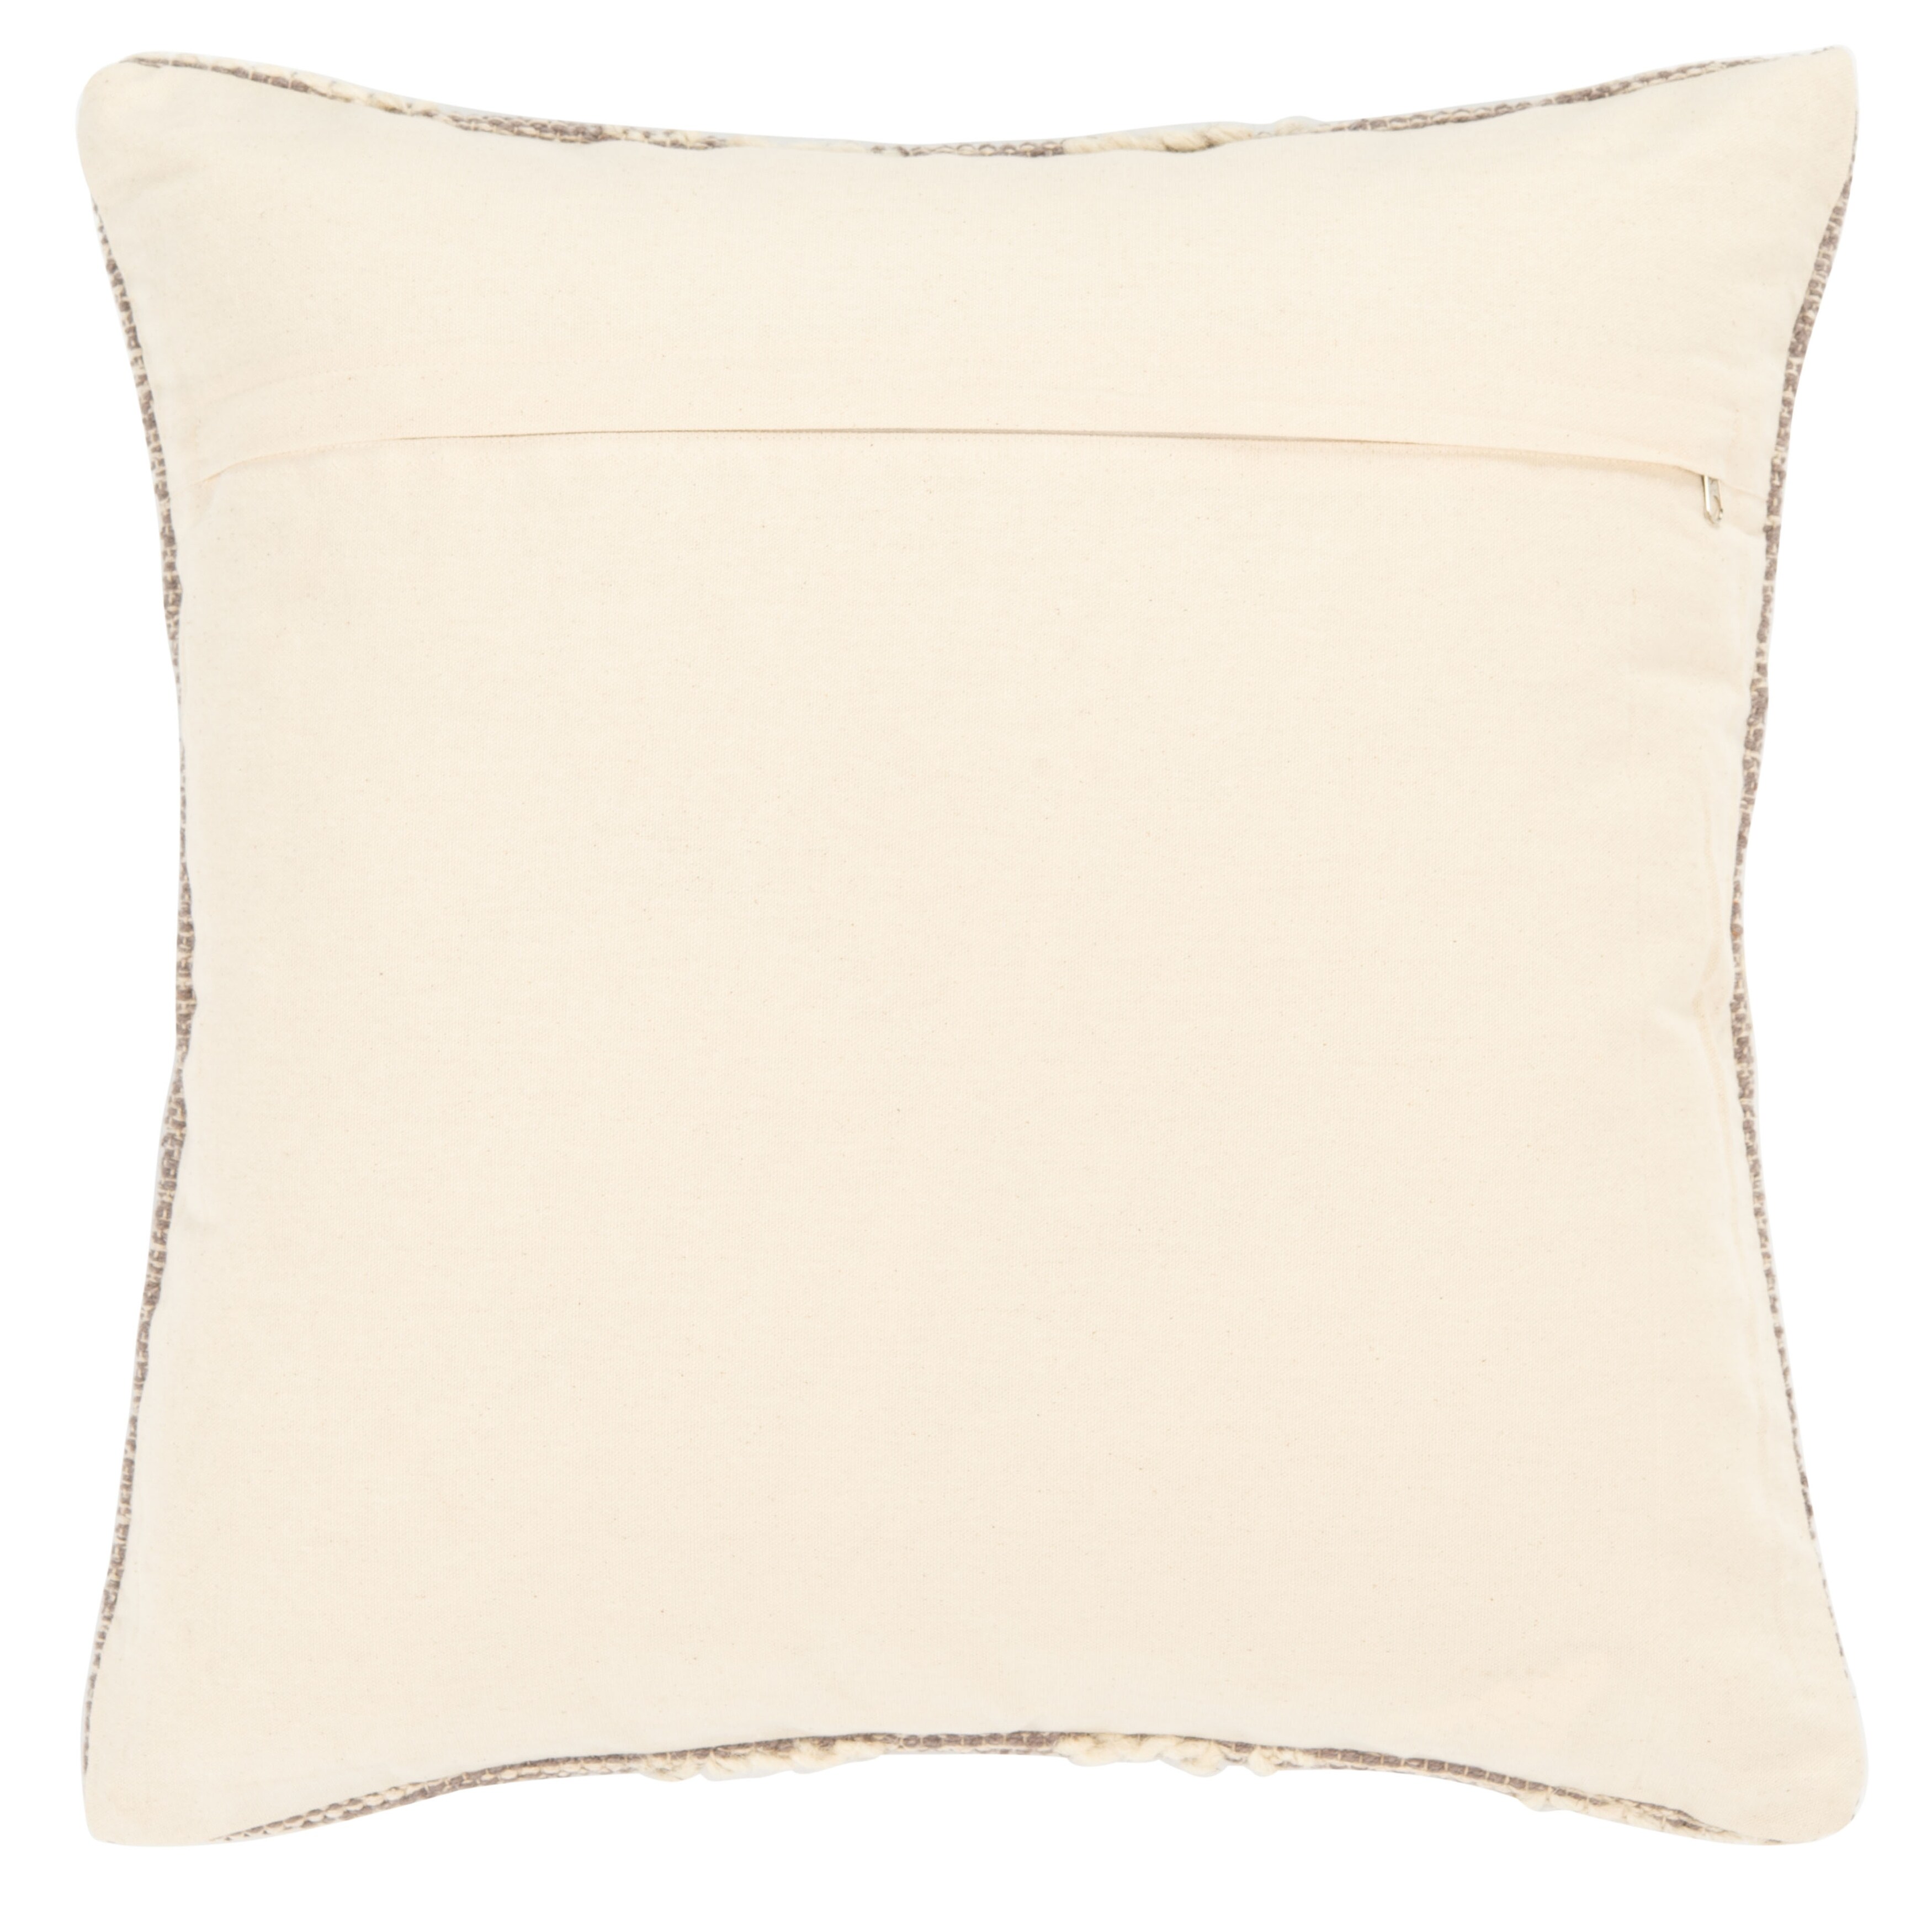 SAFAVIEH Lannie Boho 18-inch Square Decorative Accent Throw Pillow